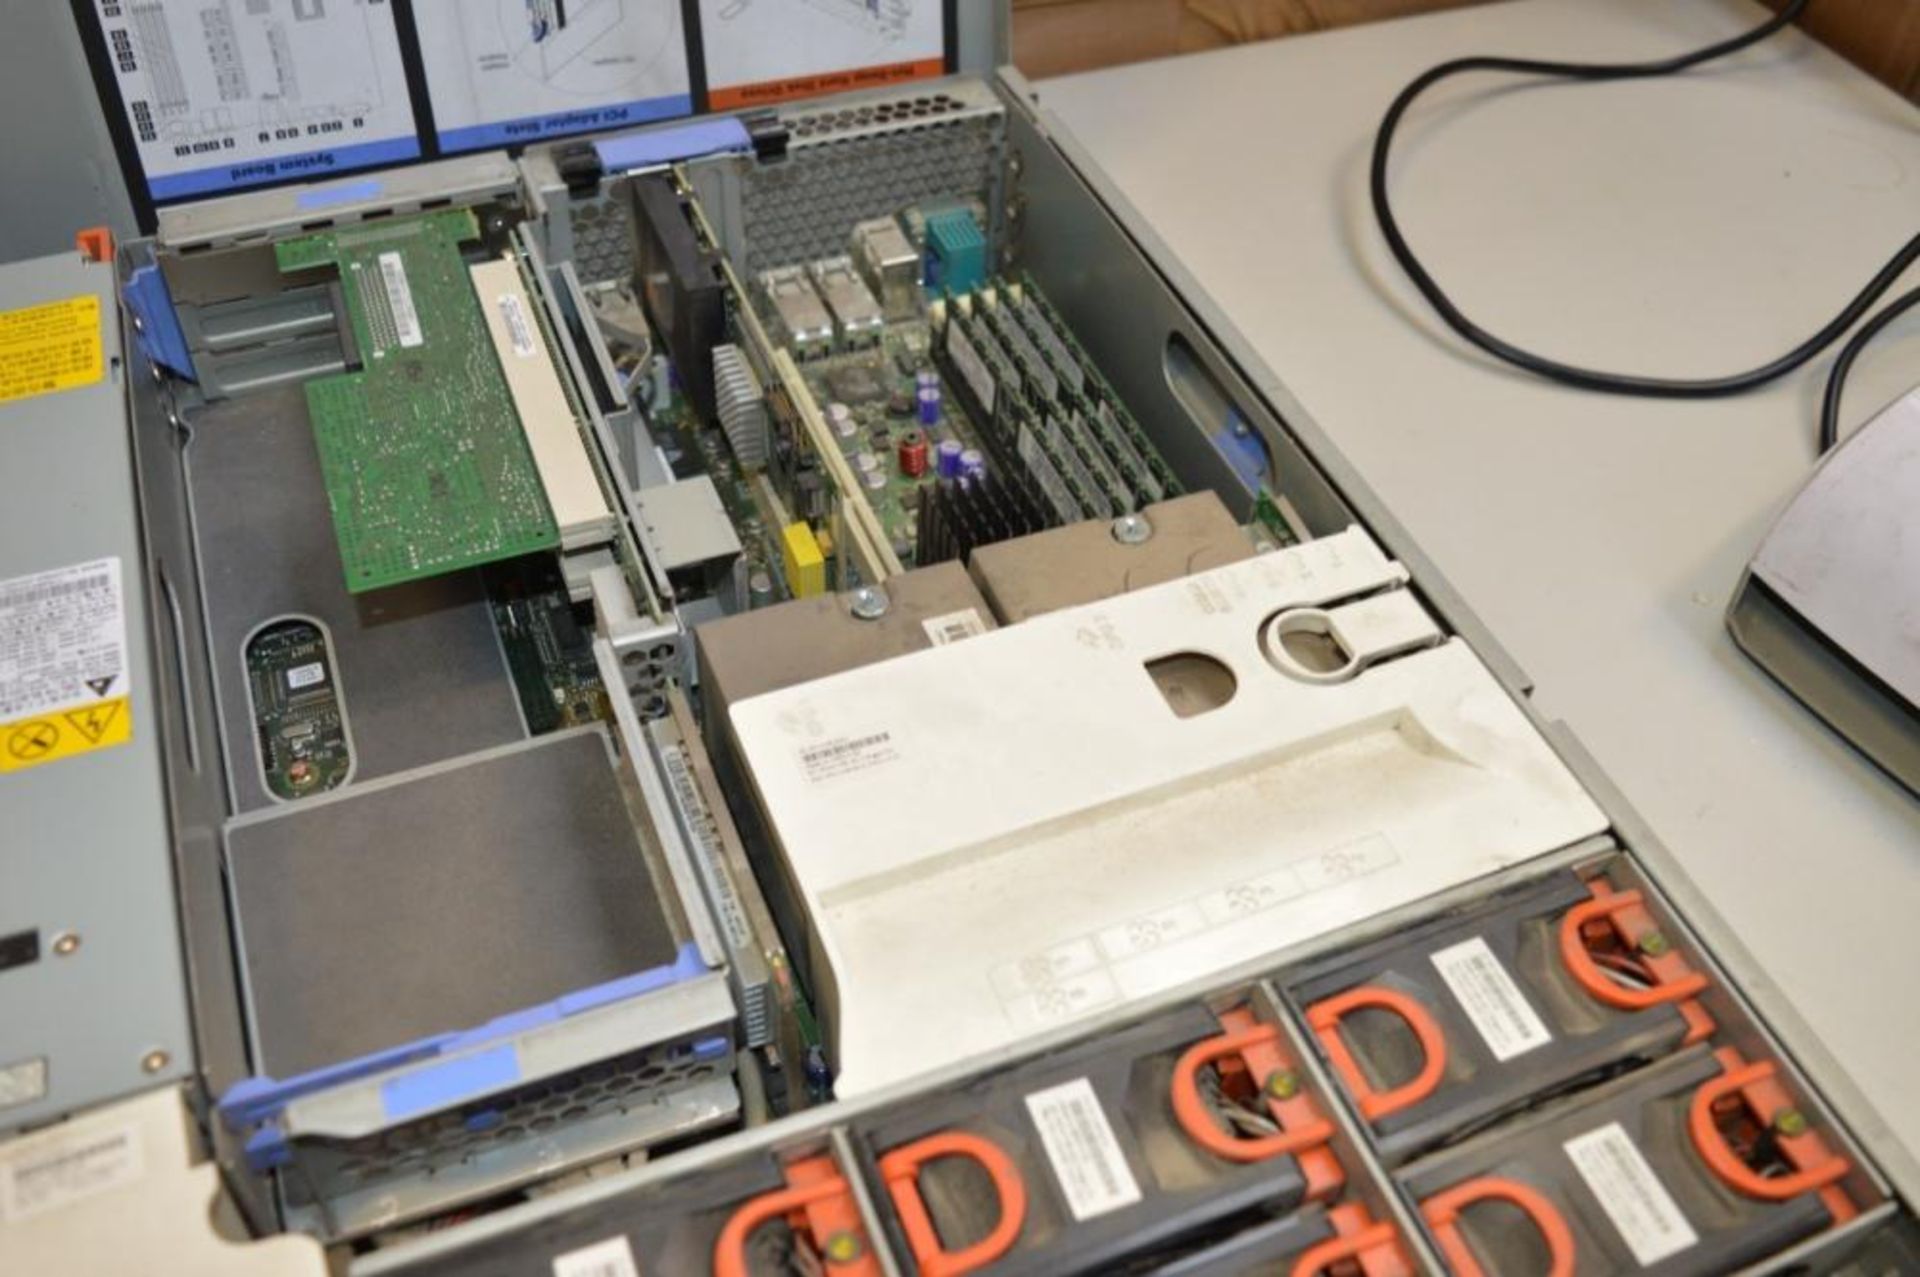 1 x IBM xSeries 345 Server - Includes Dual Xeon Processors, 1gb Ram, Raid Card - Hard Disk Drives - Image 7 of 8